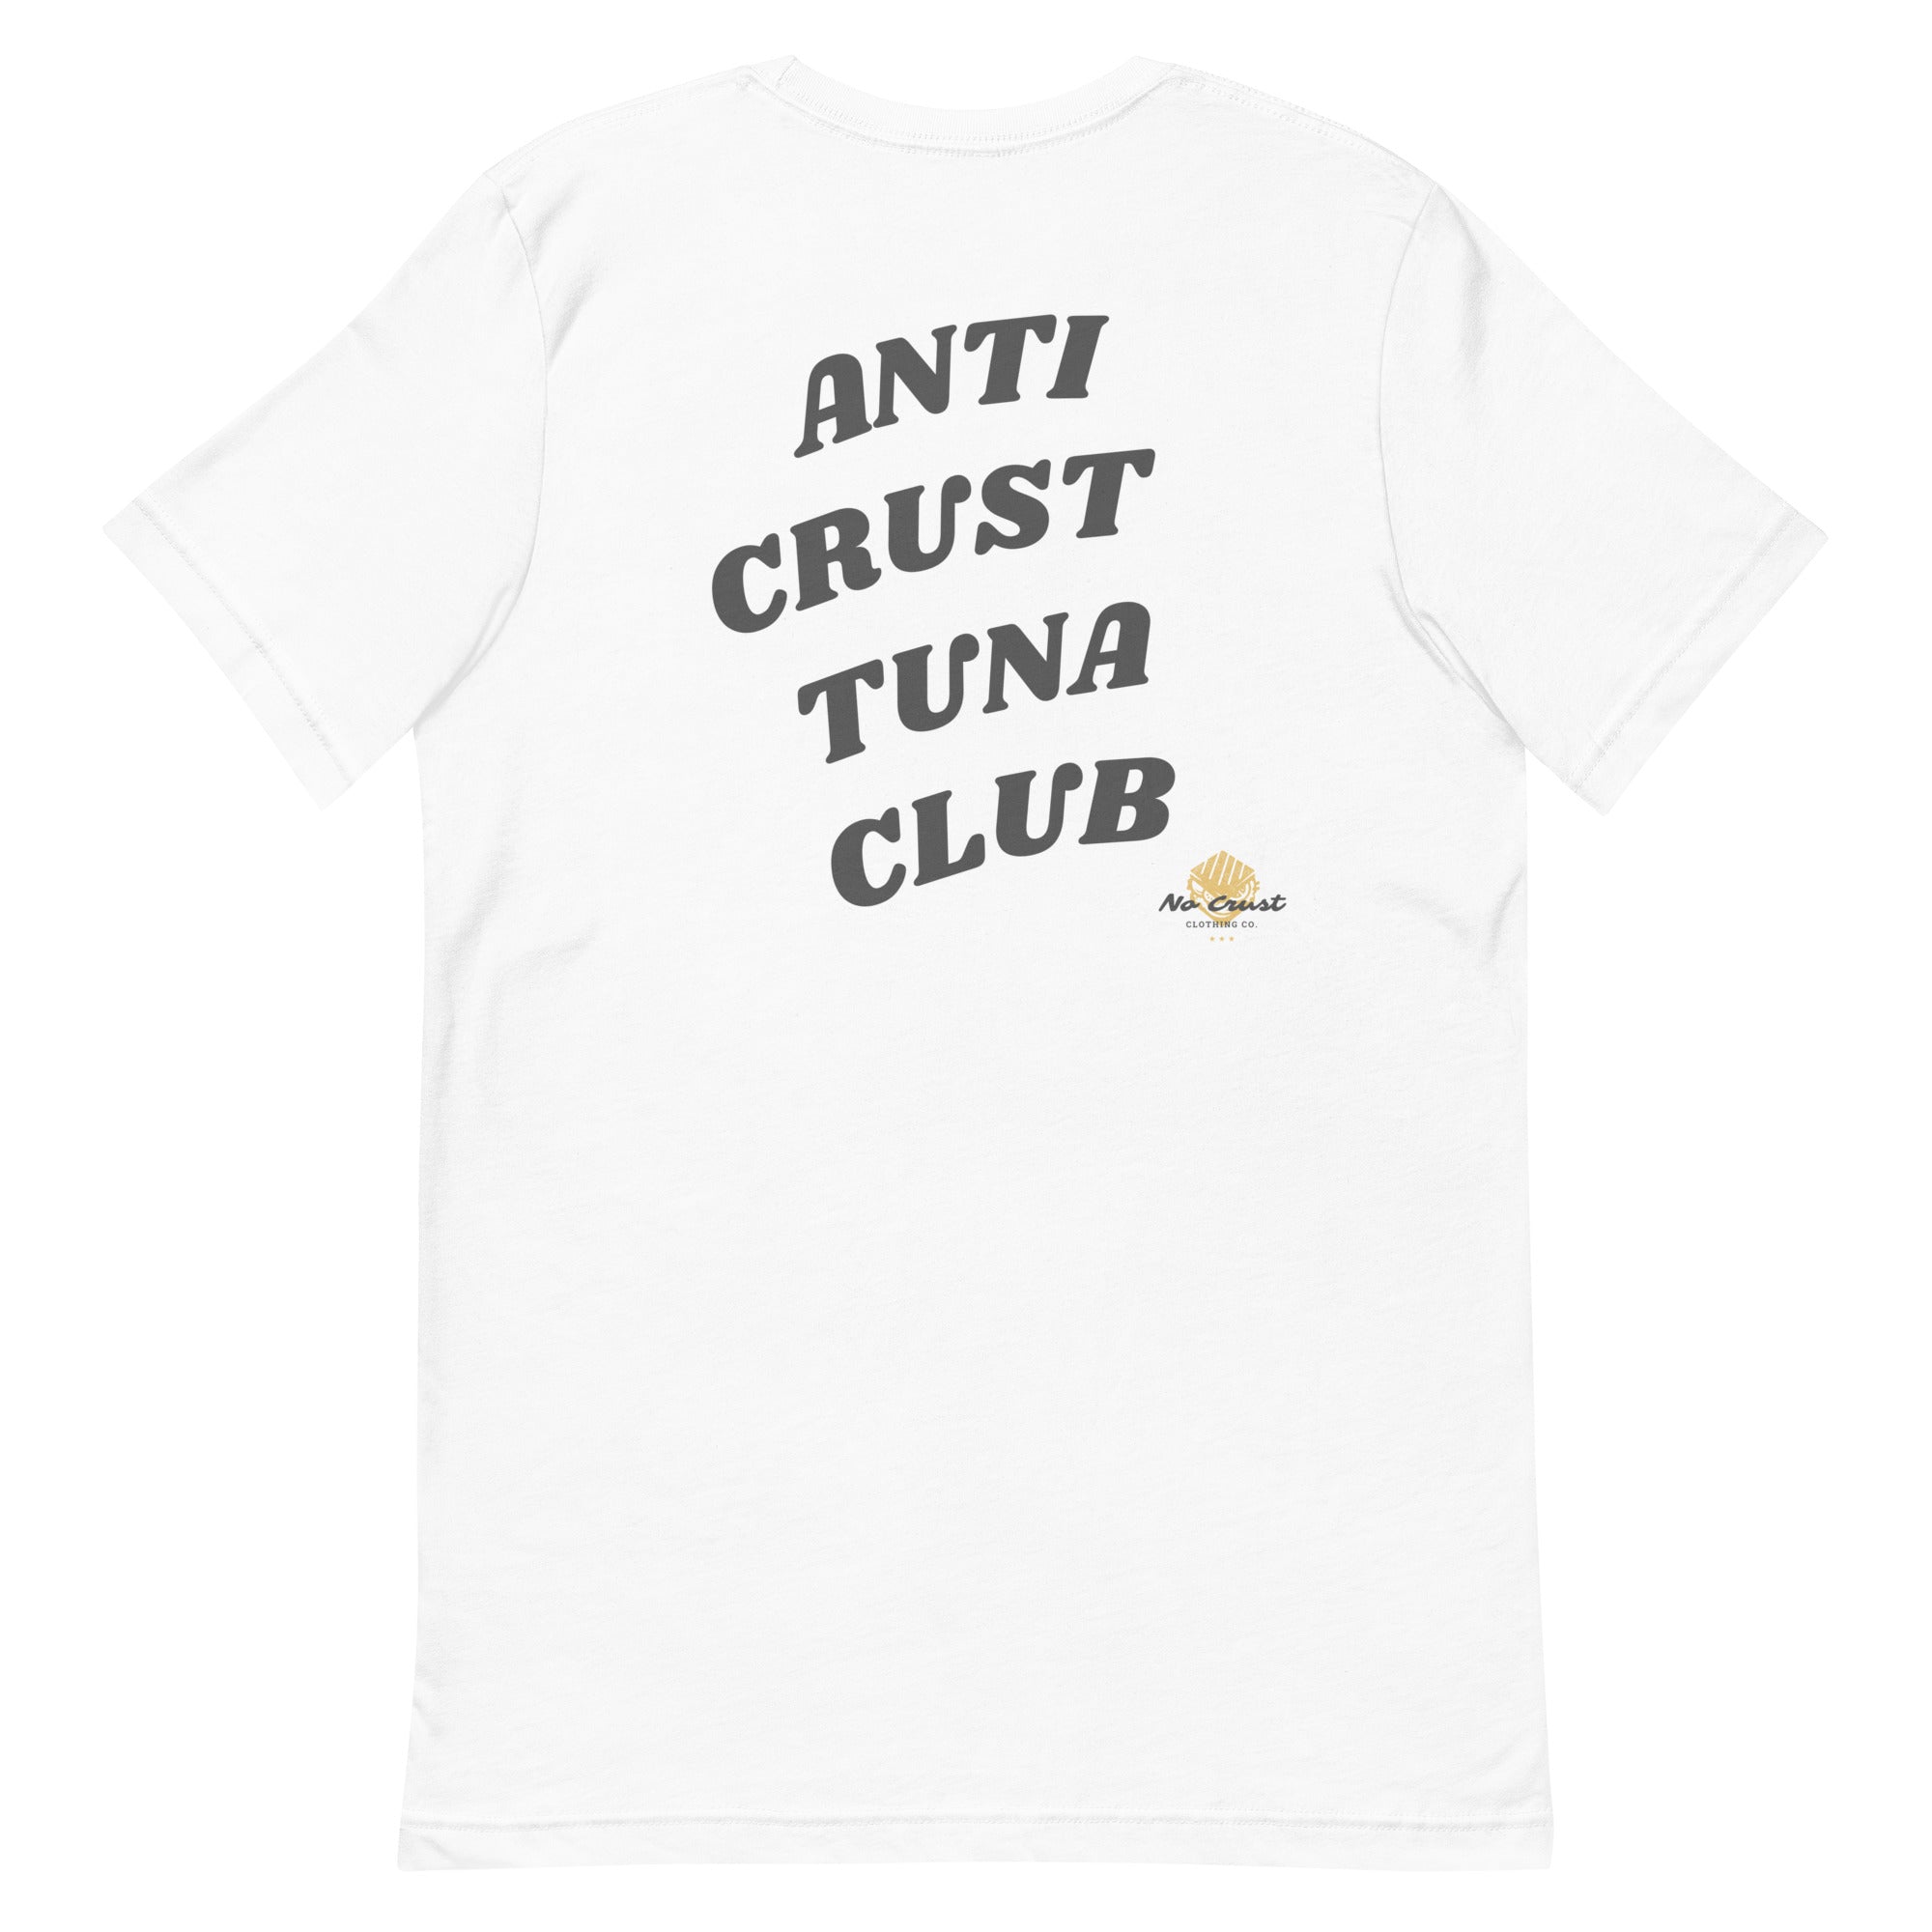 Tuna No Crust – Personal Impact Clothing